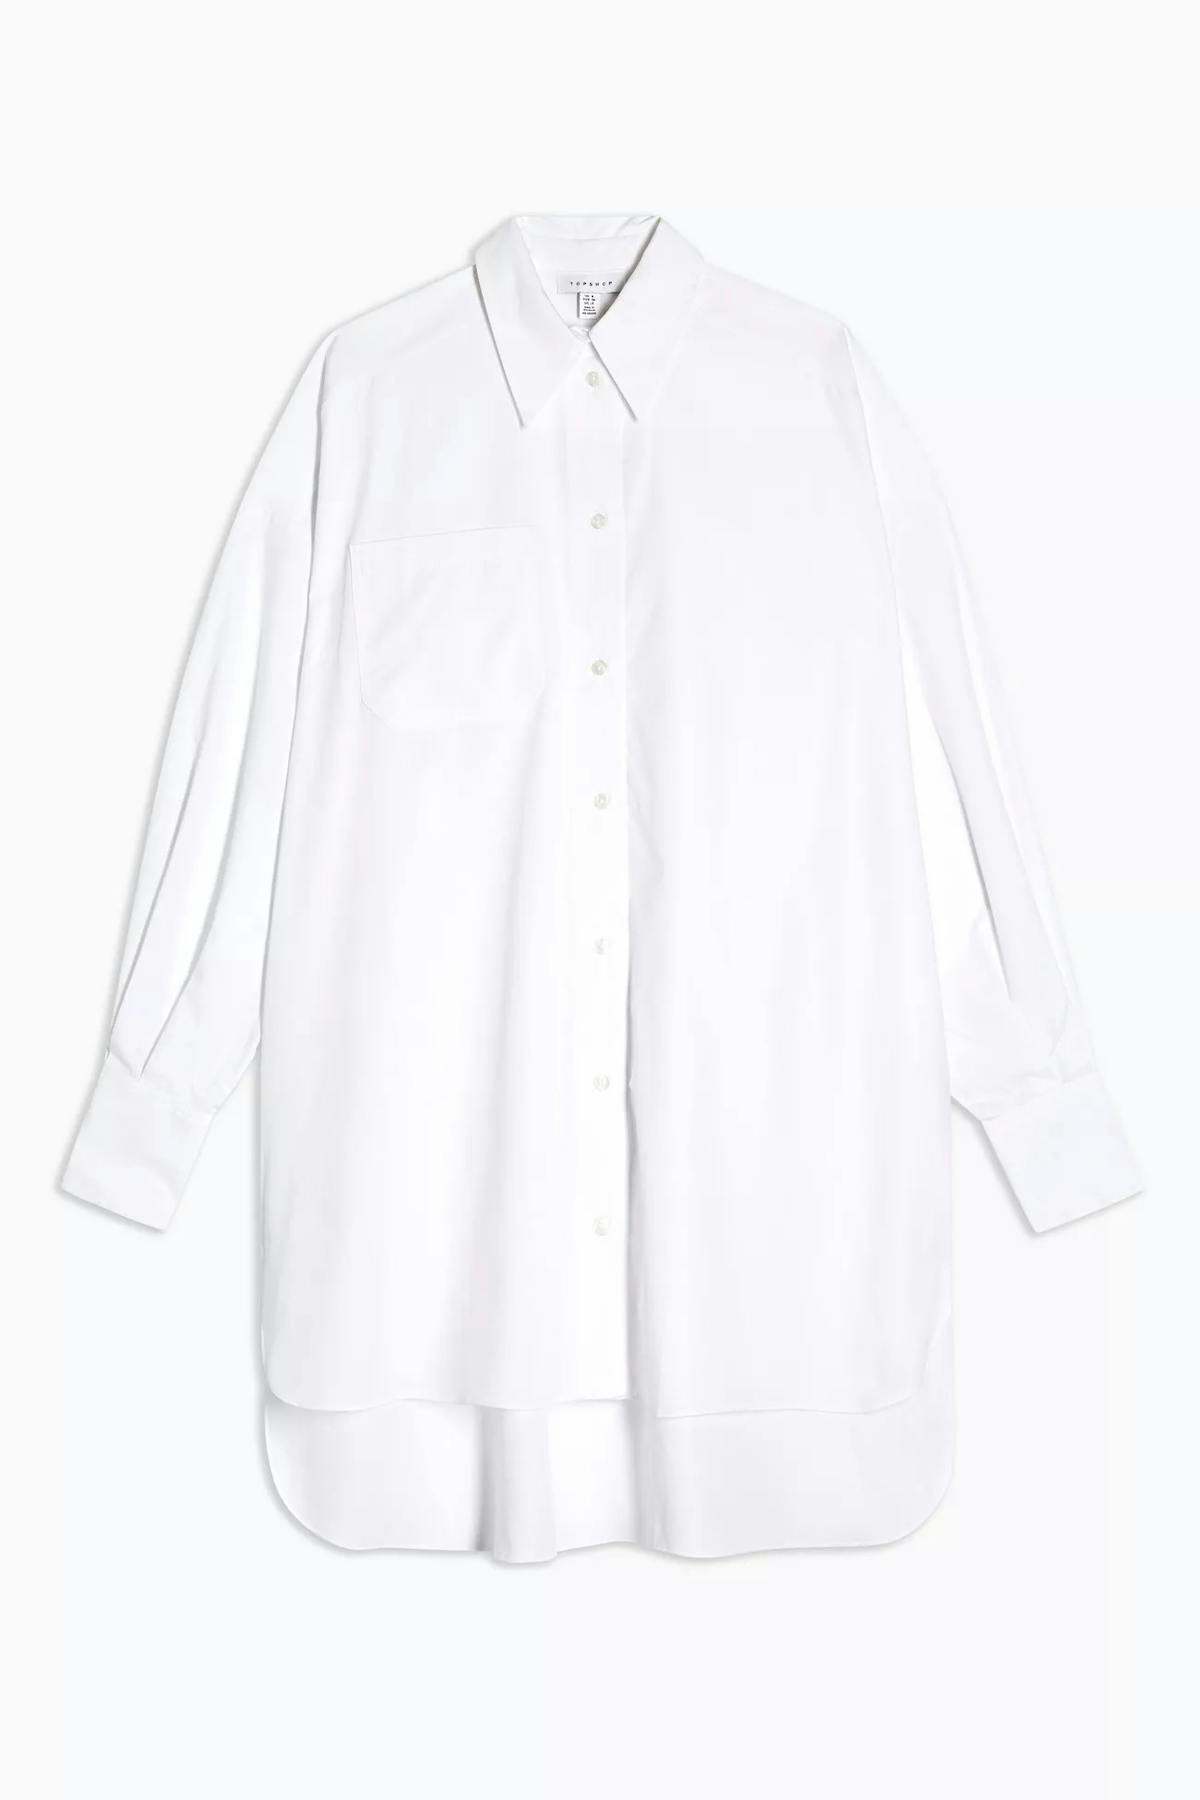 The best women's white shirts